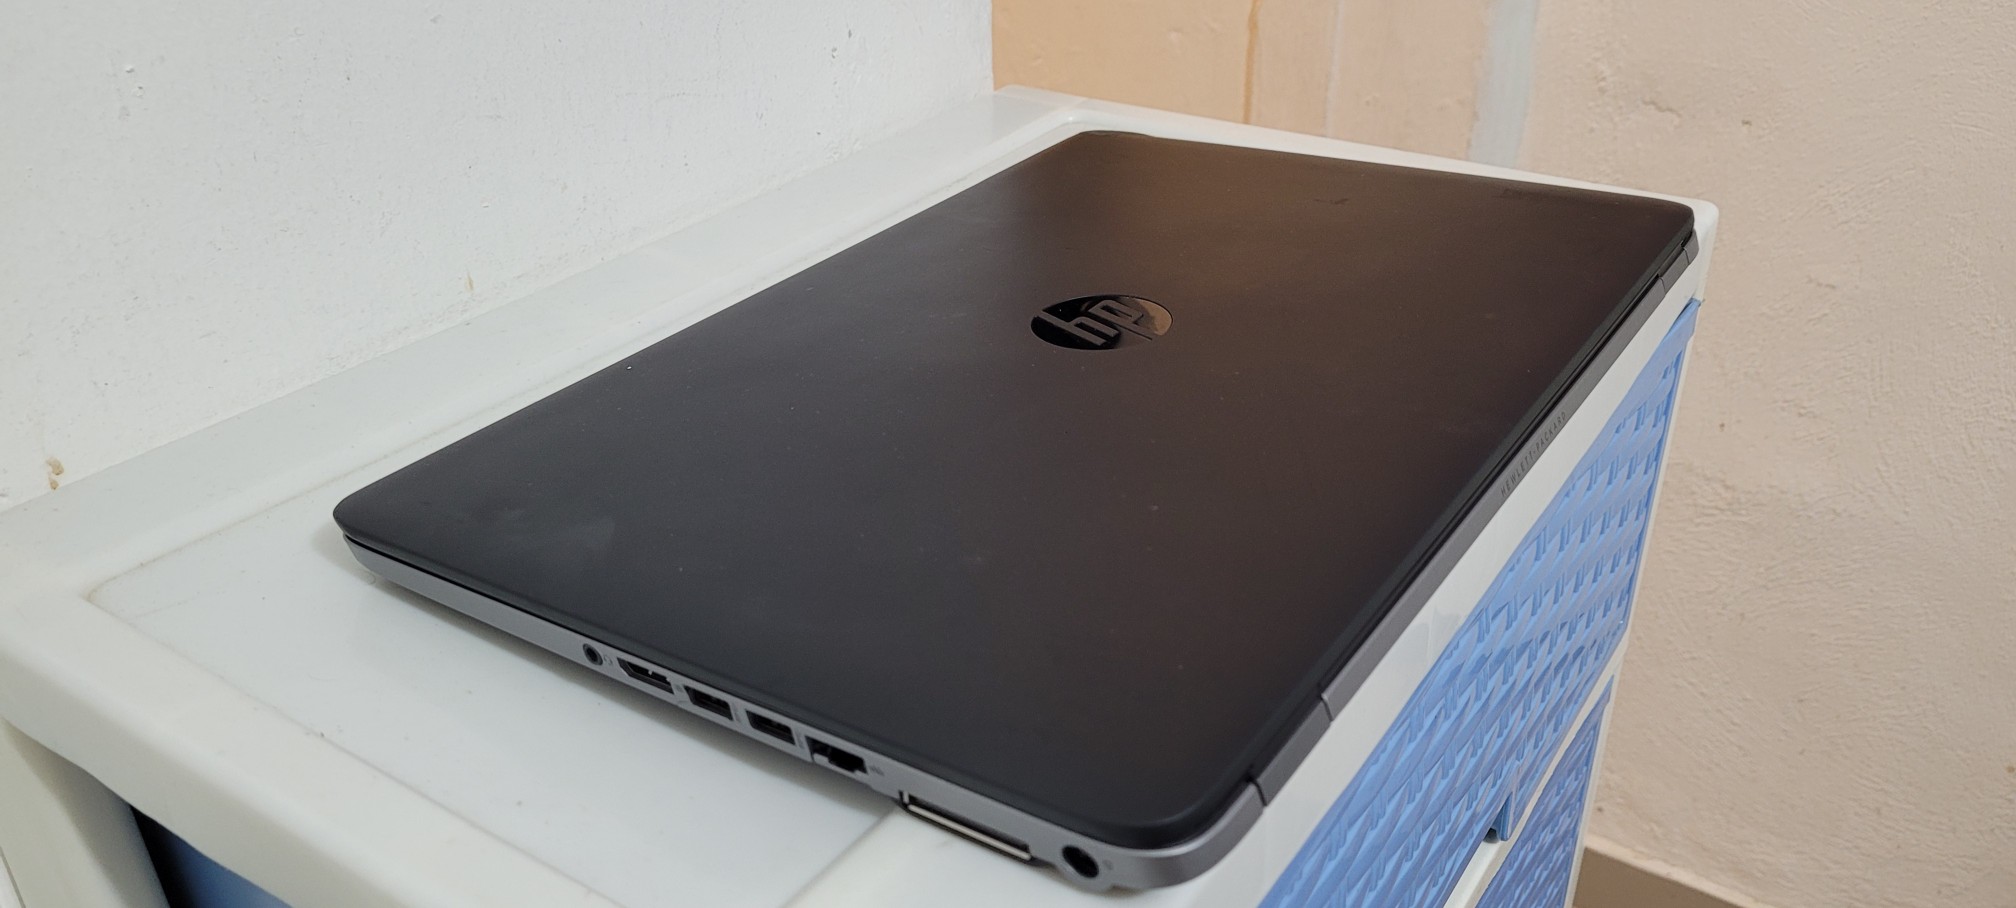 computadoras y laptops - Laptop hp 17 Pulg Core i5 Ram 8gb Disco 256gb ssd 1080p 2